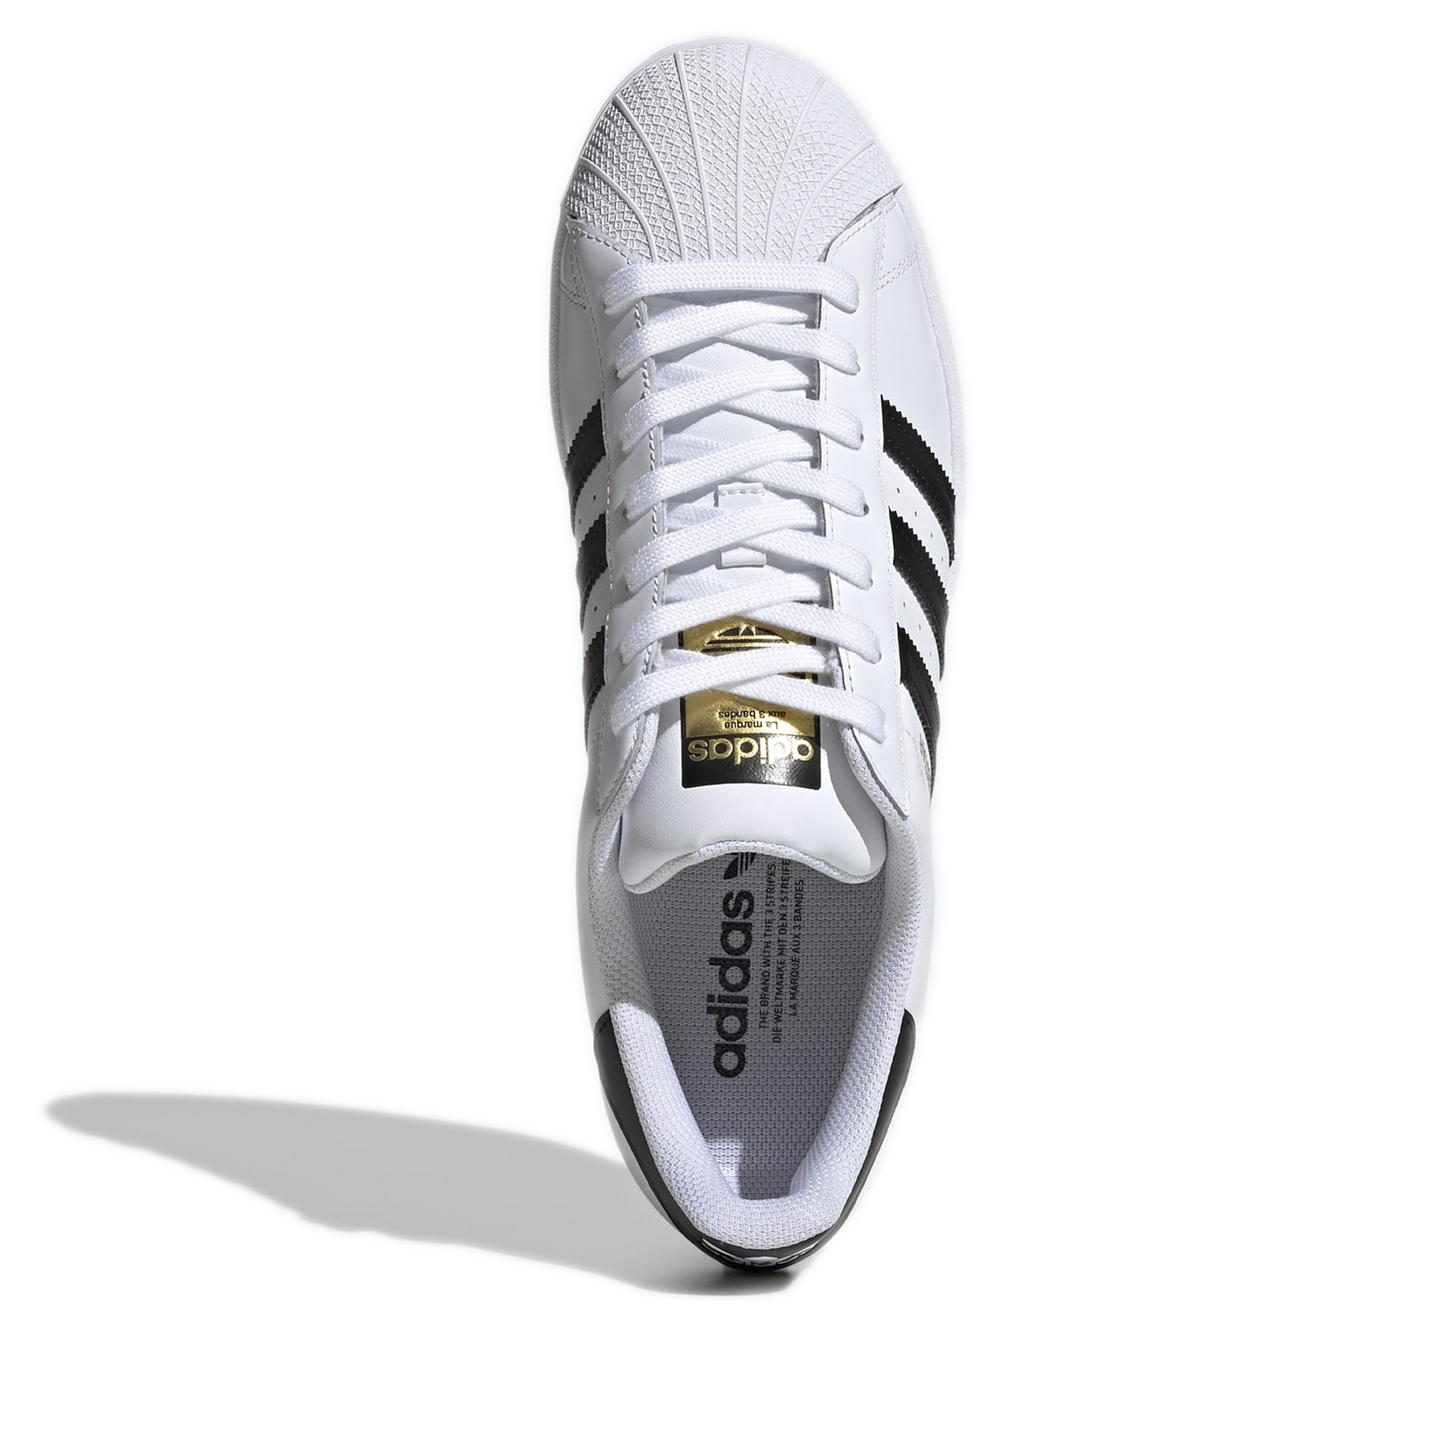 Grade School Adidas Superstar J Shoes - White/ Black